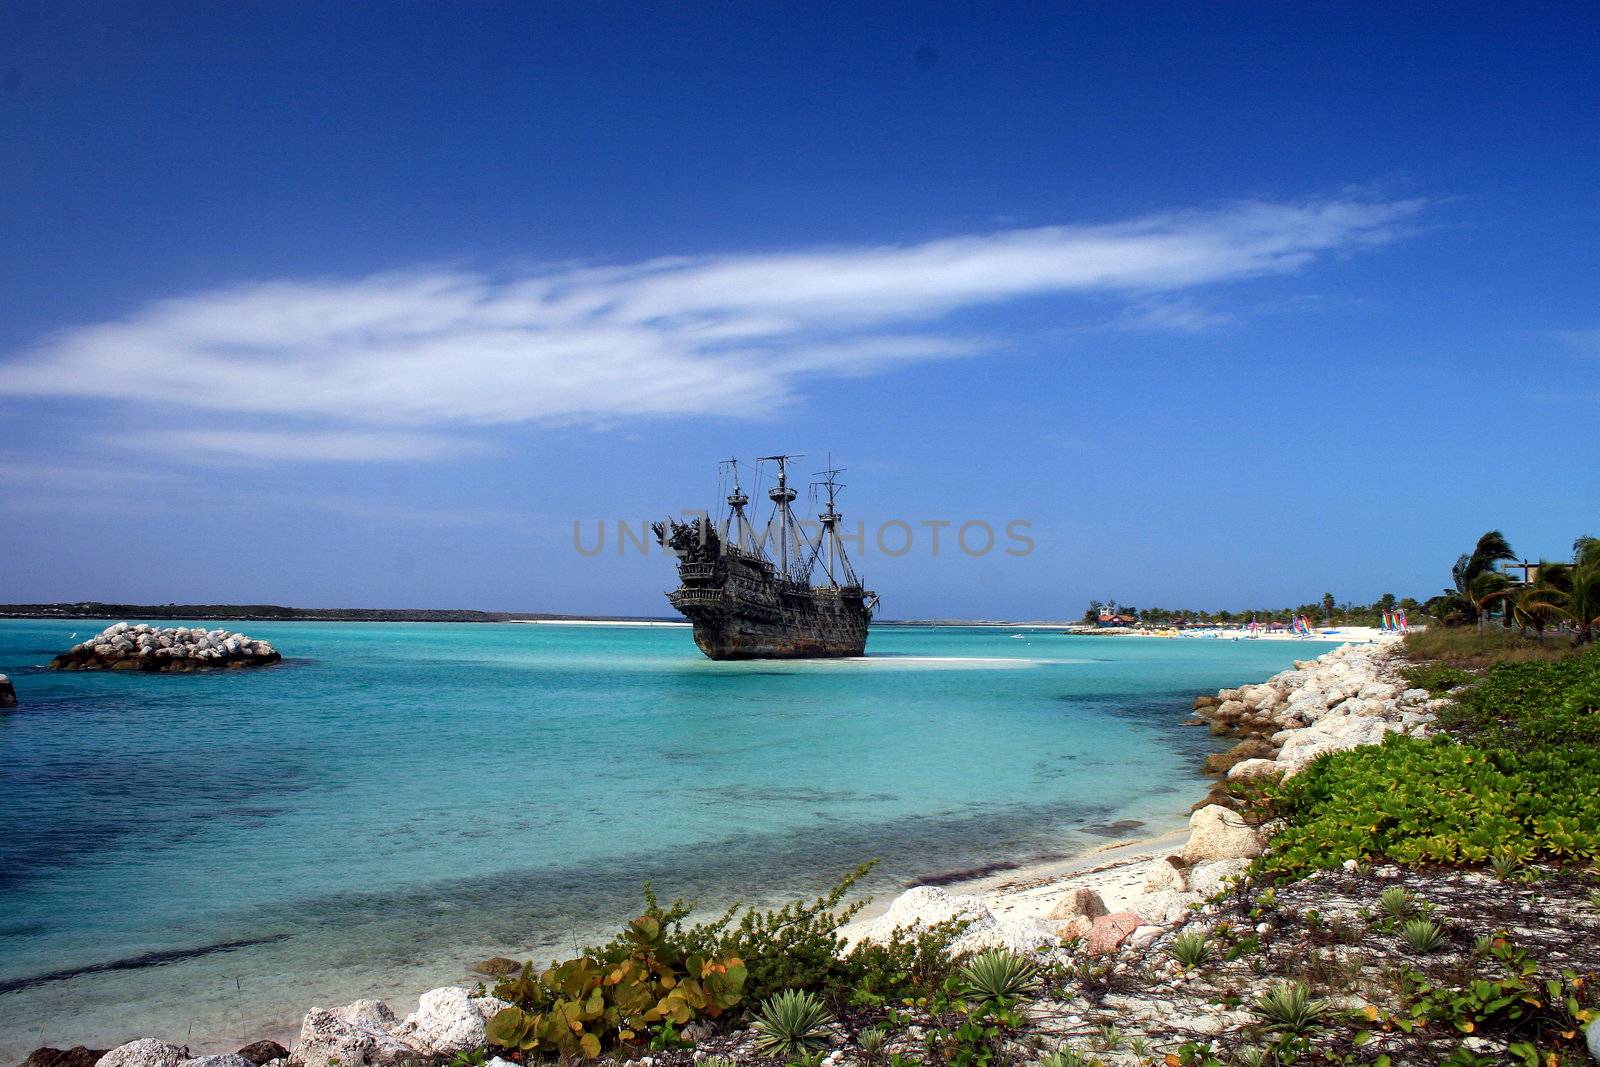 Caribbean Pirate Ship by quackersnaps